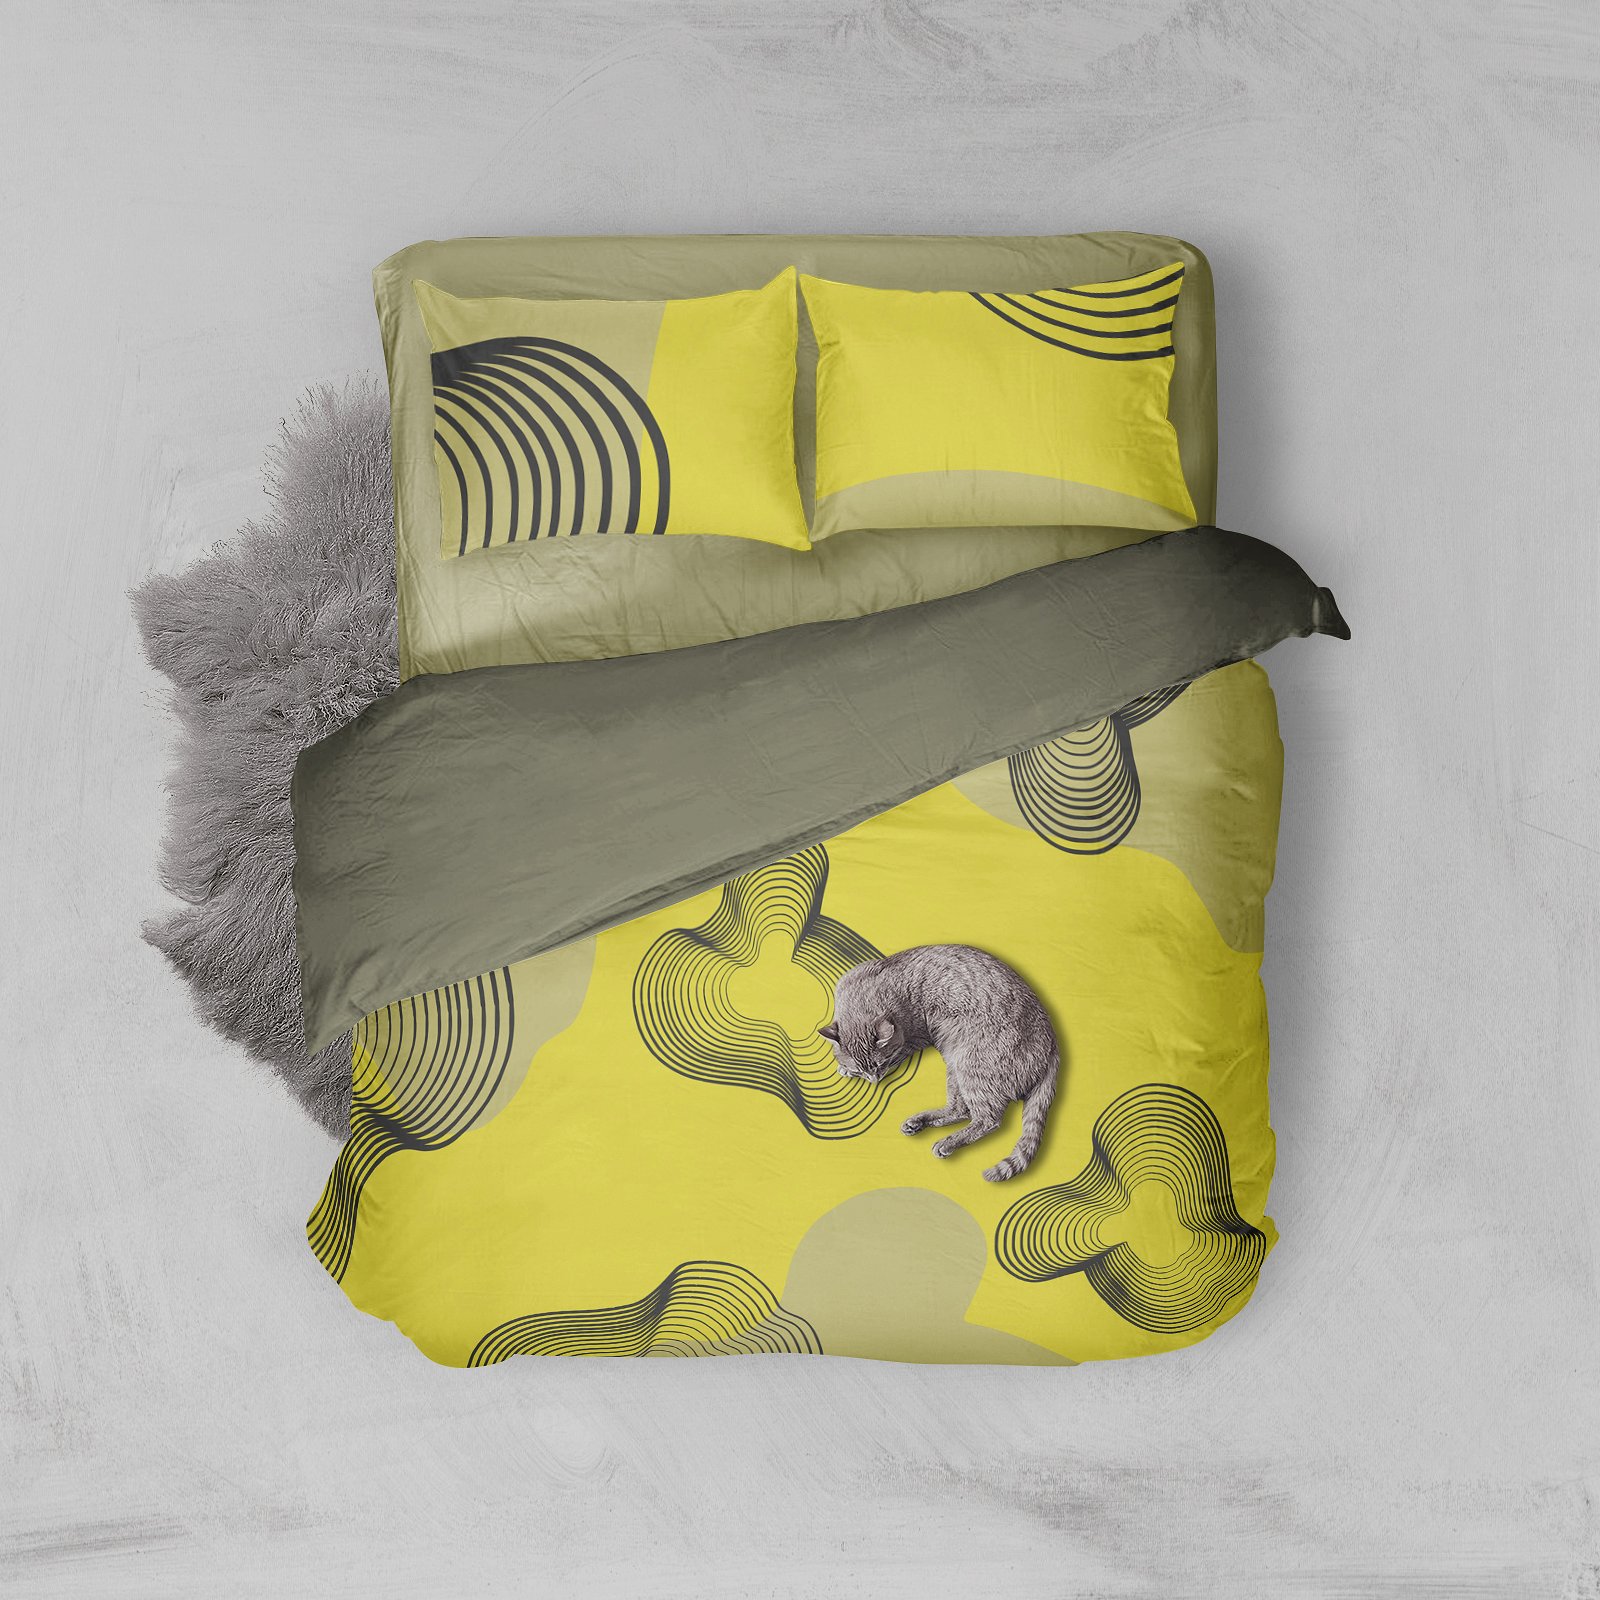 优雅迷彩抽象图案包 Elegant Camouflage Abstract Pattern Pack插图5